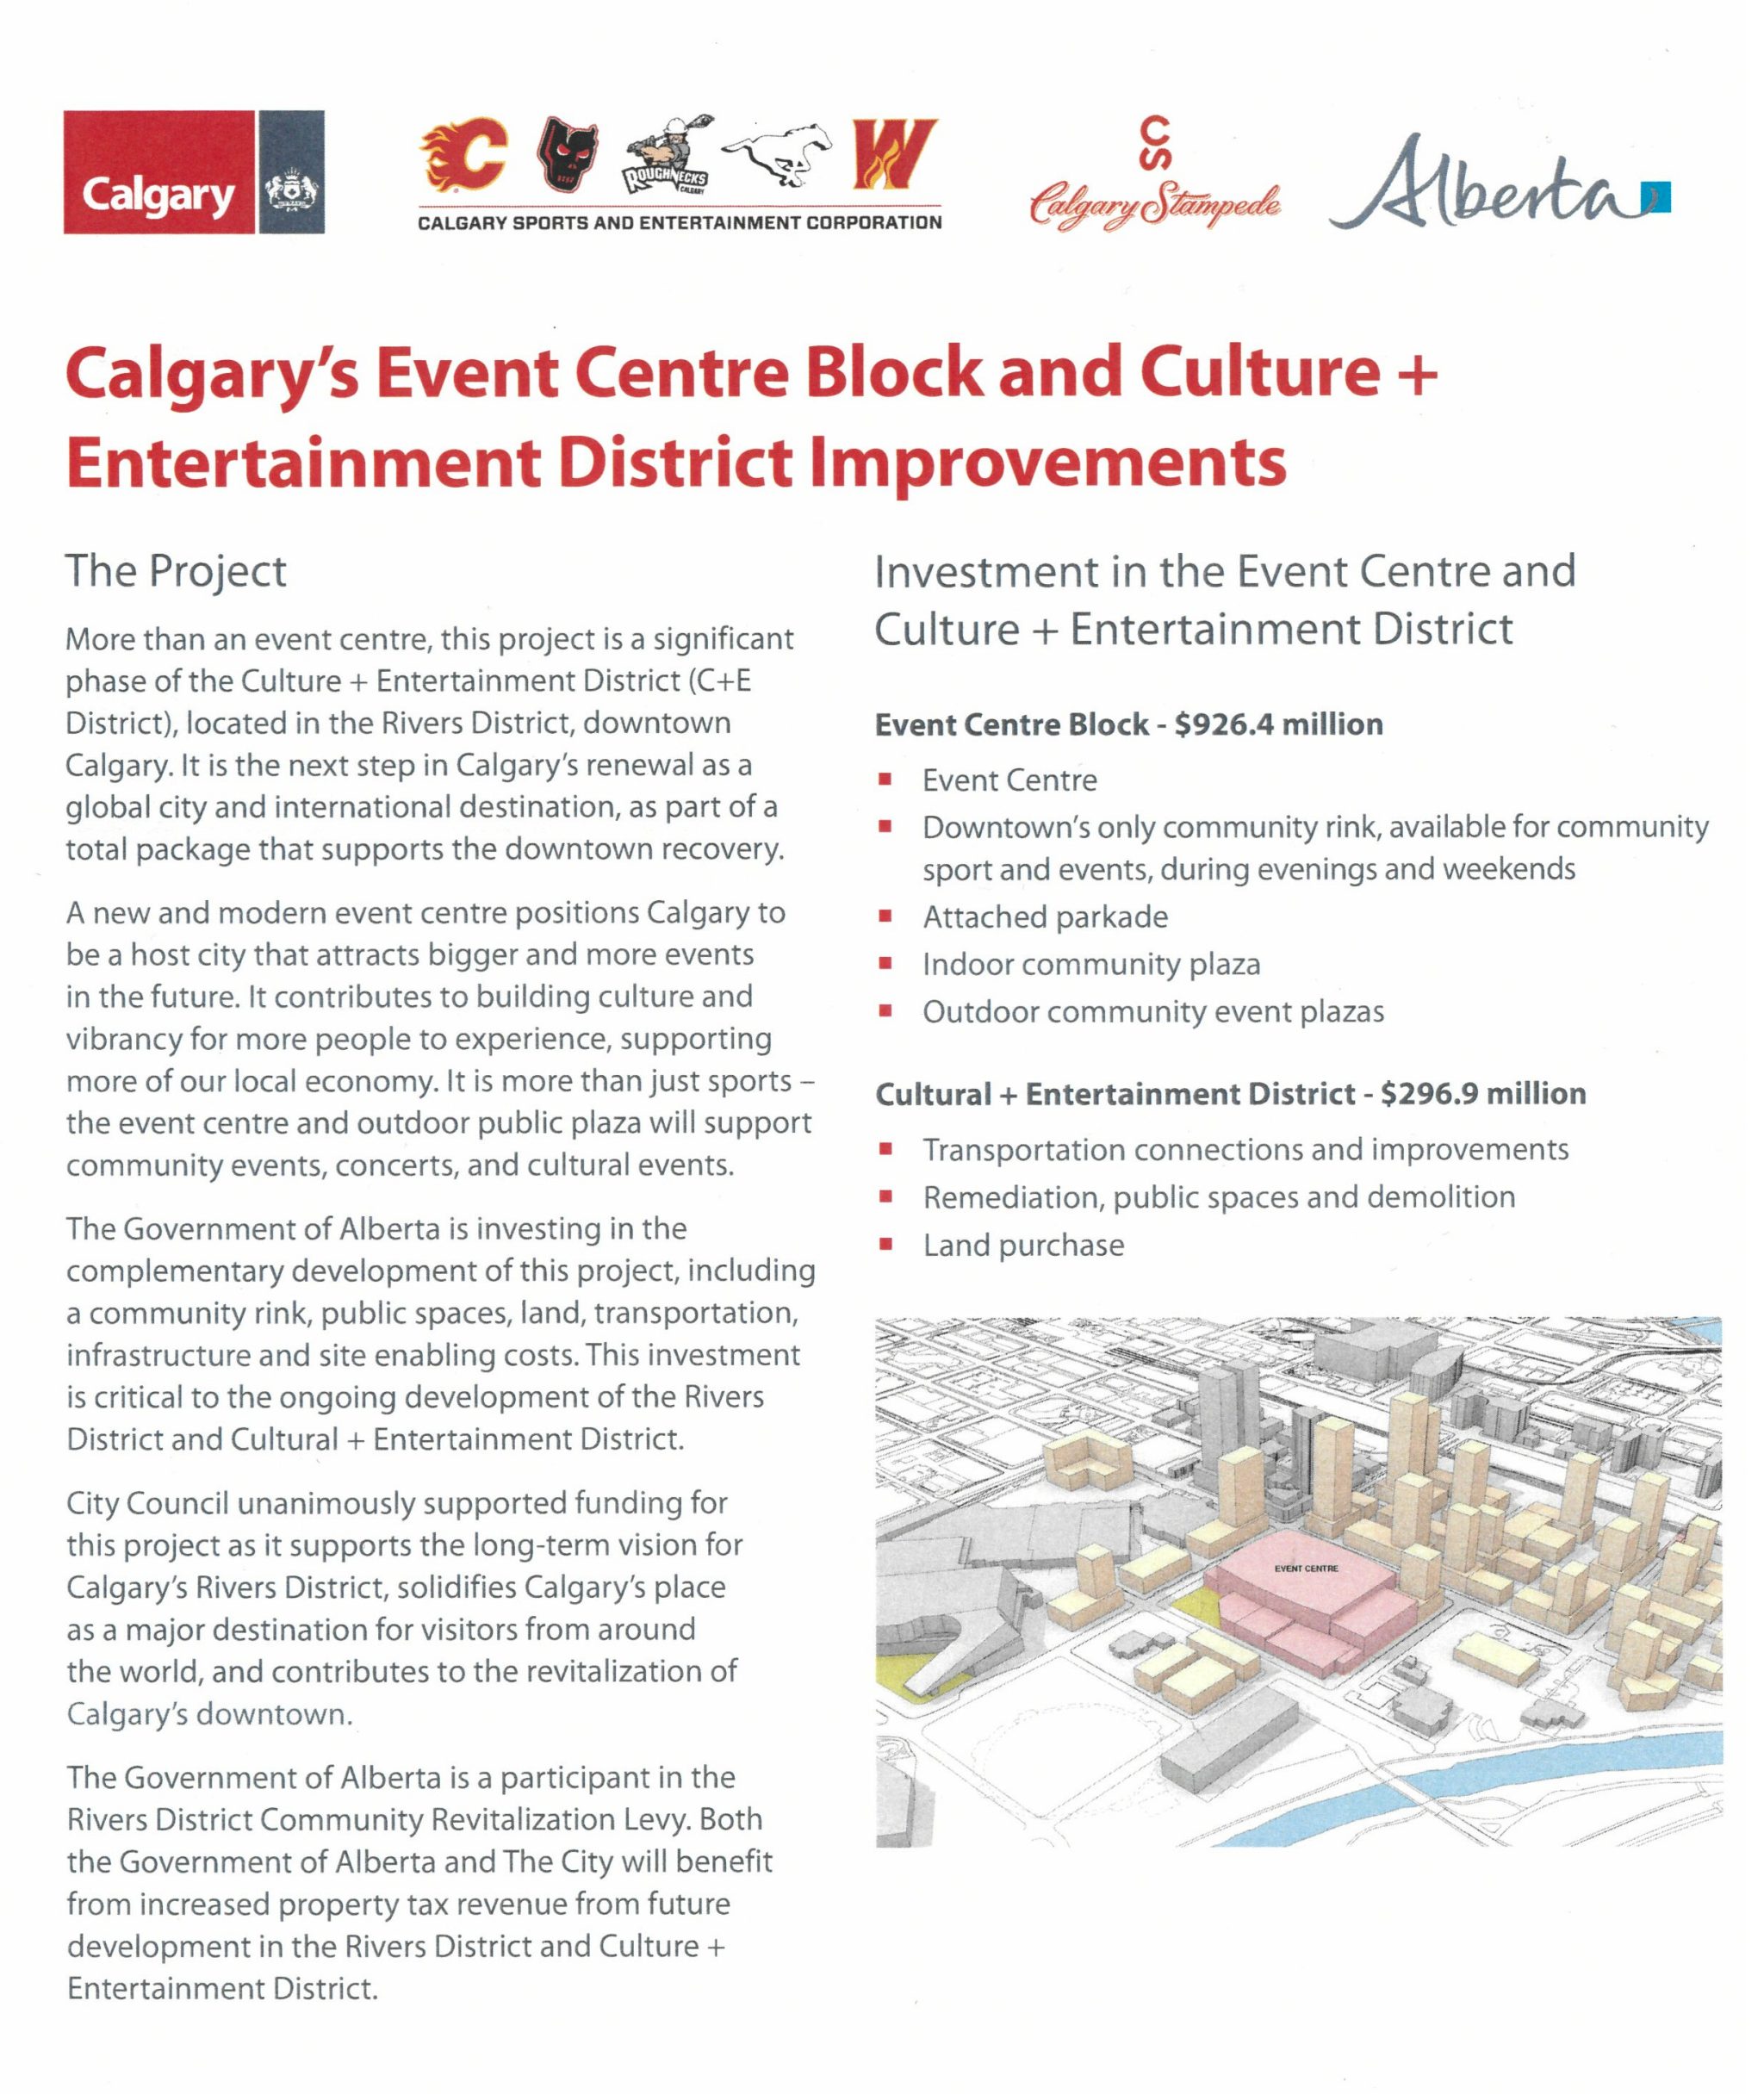 Calgary's Event Centre Block and Culture + Entertainment District Improvements